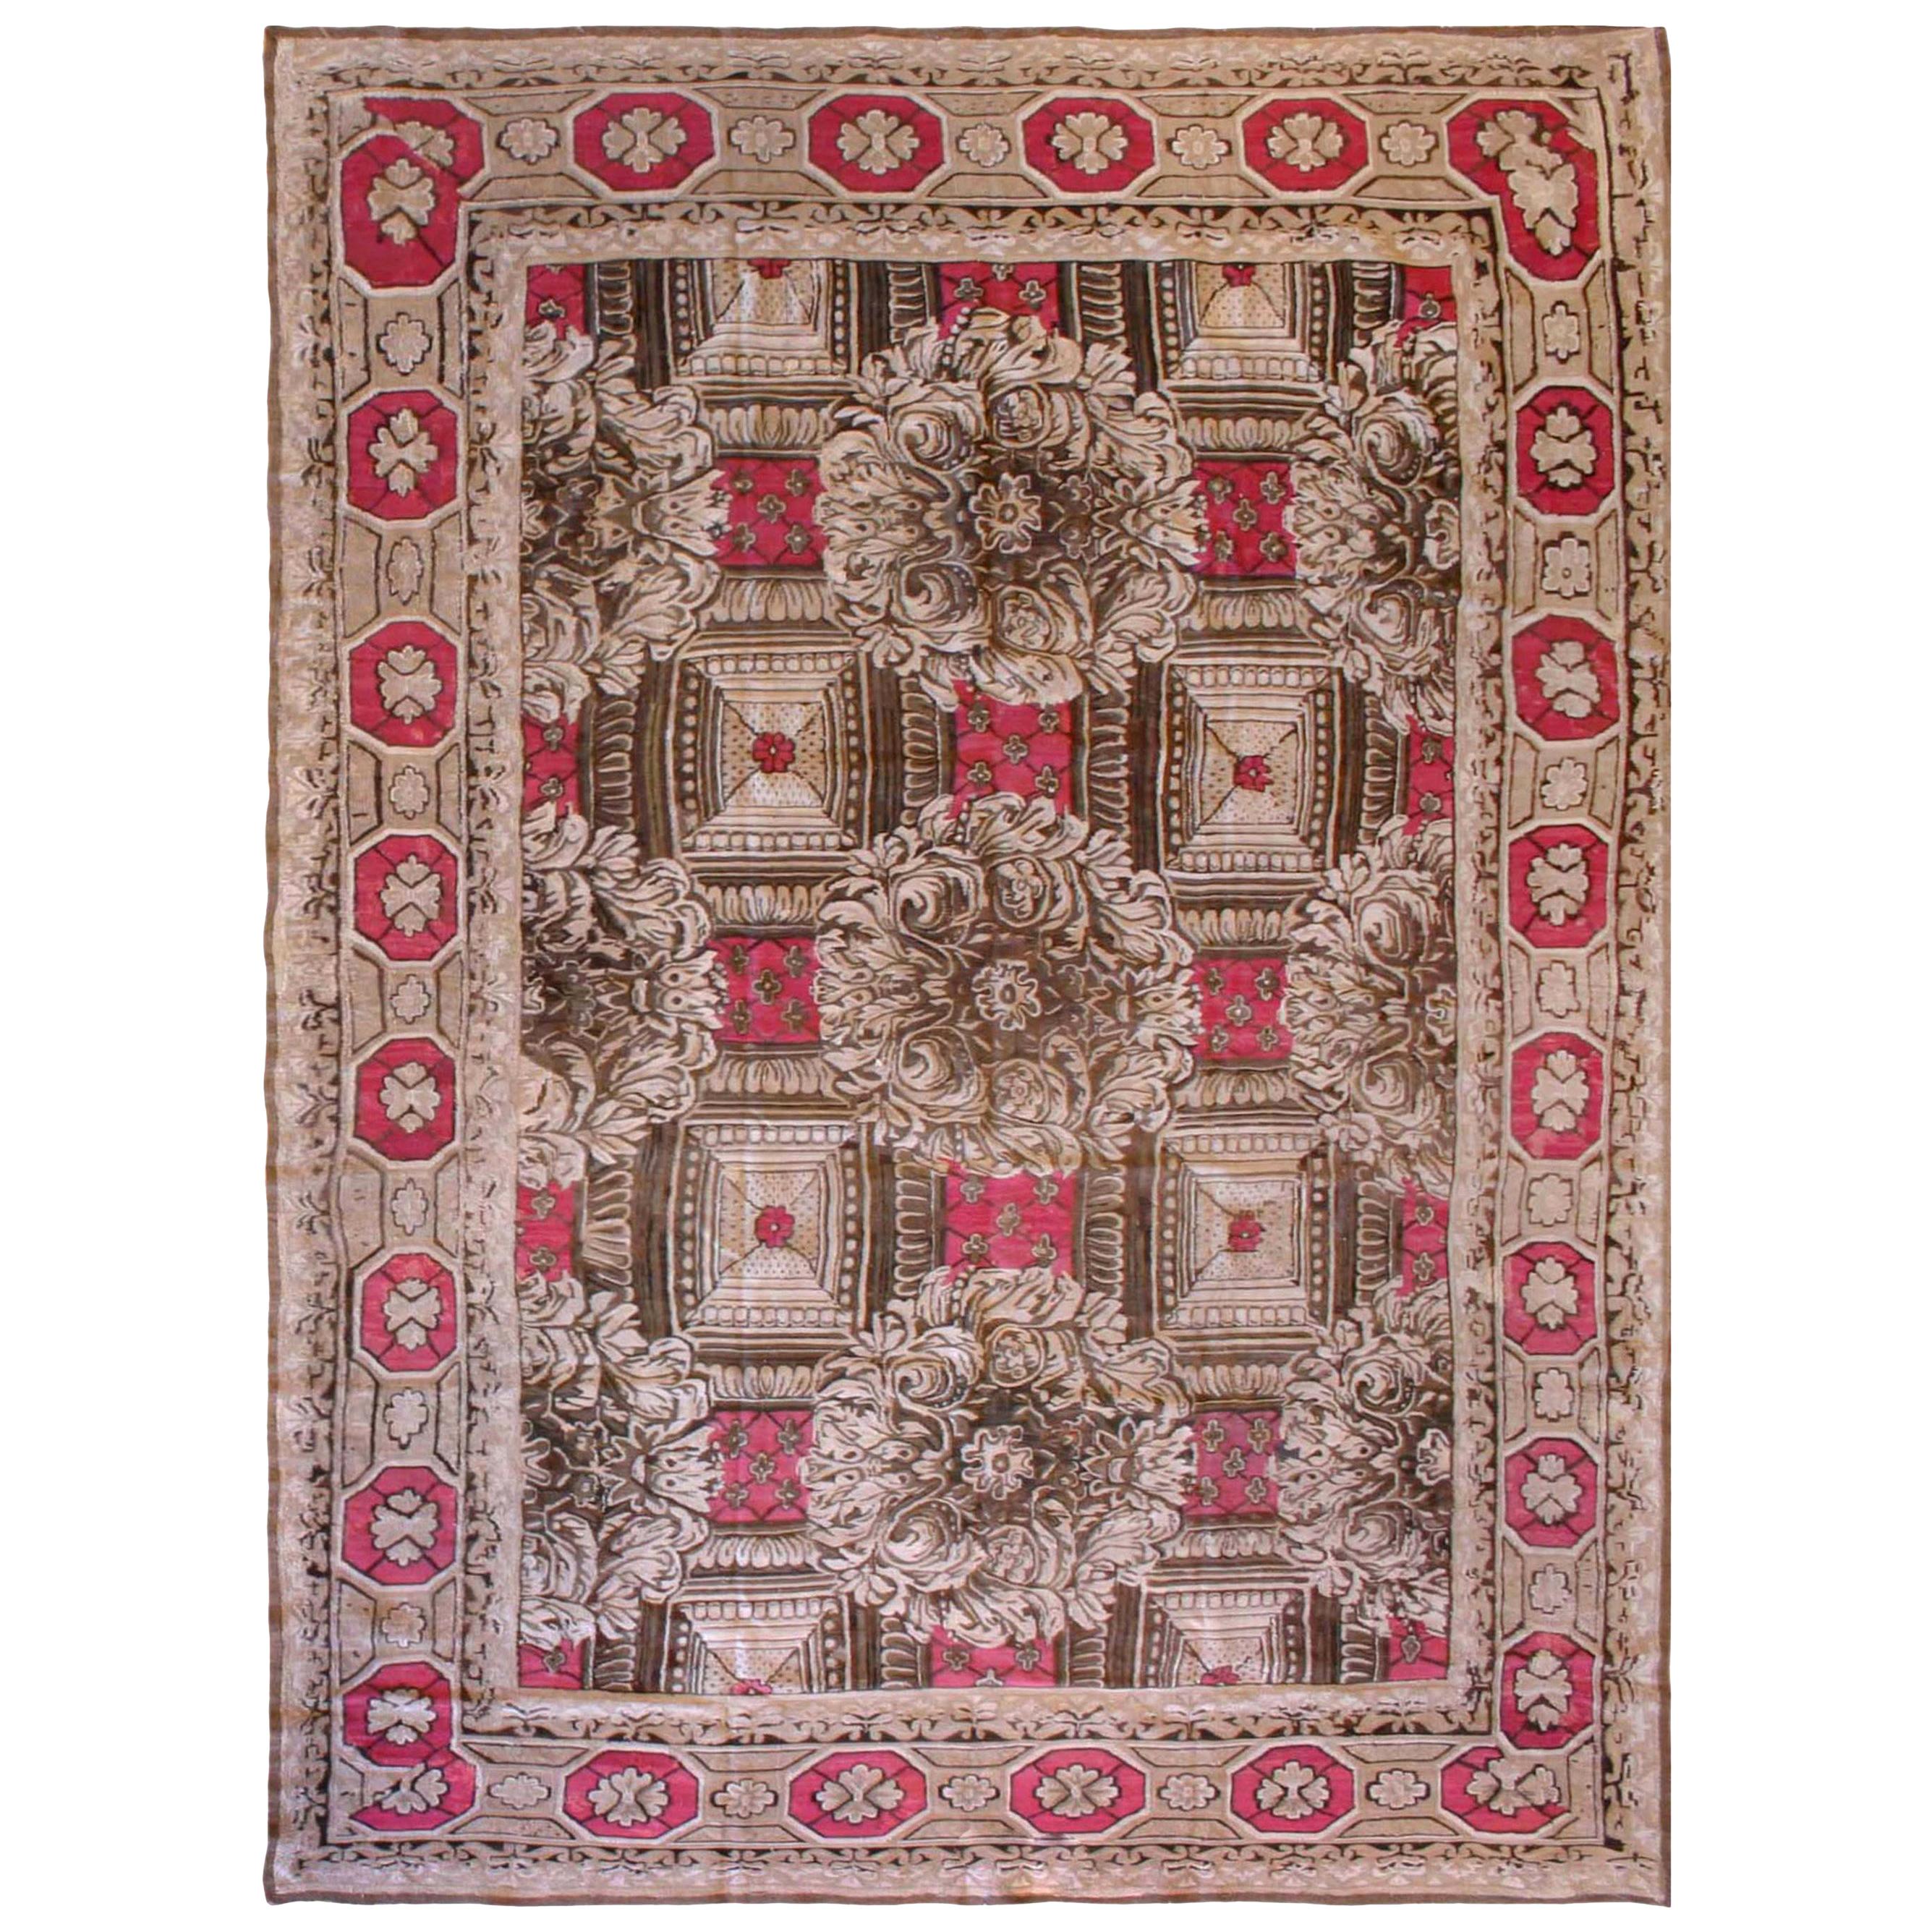 19th Century Ukrainian Handwoven Wool Carpet